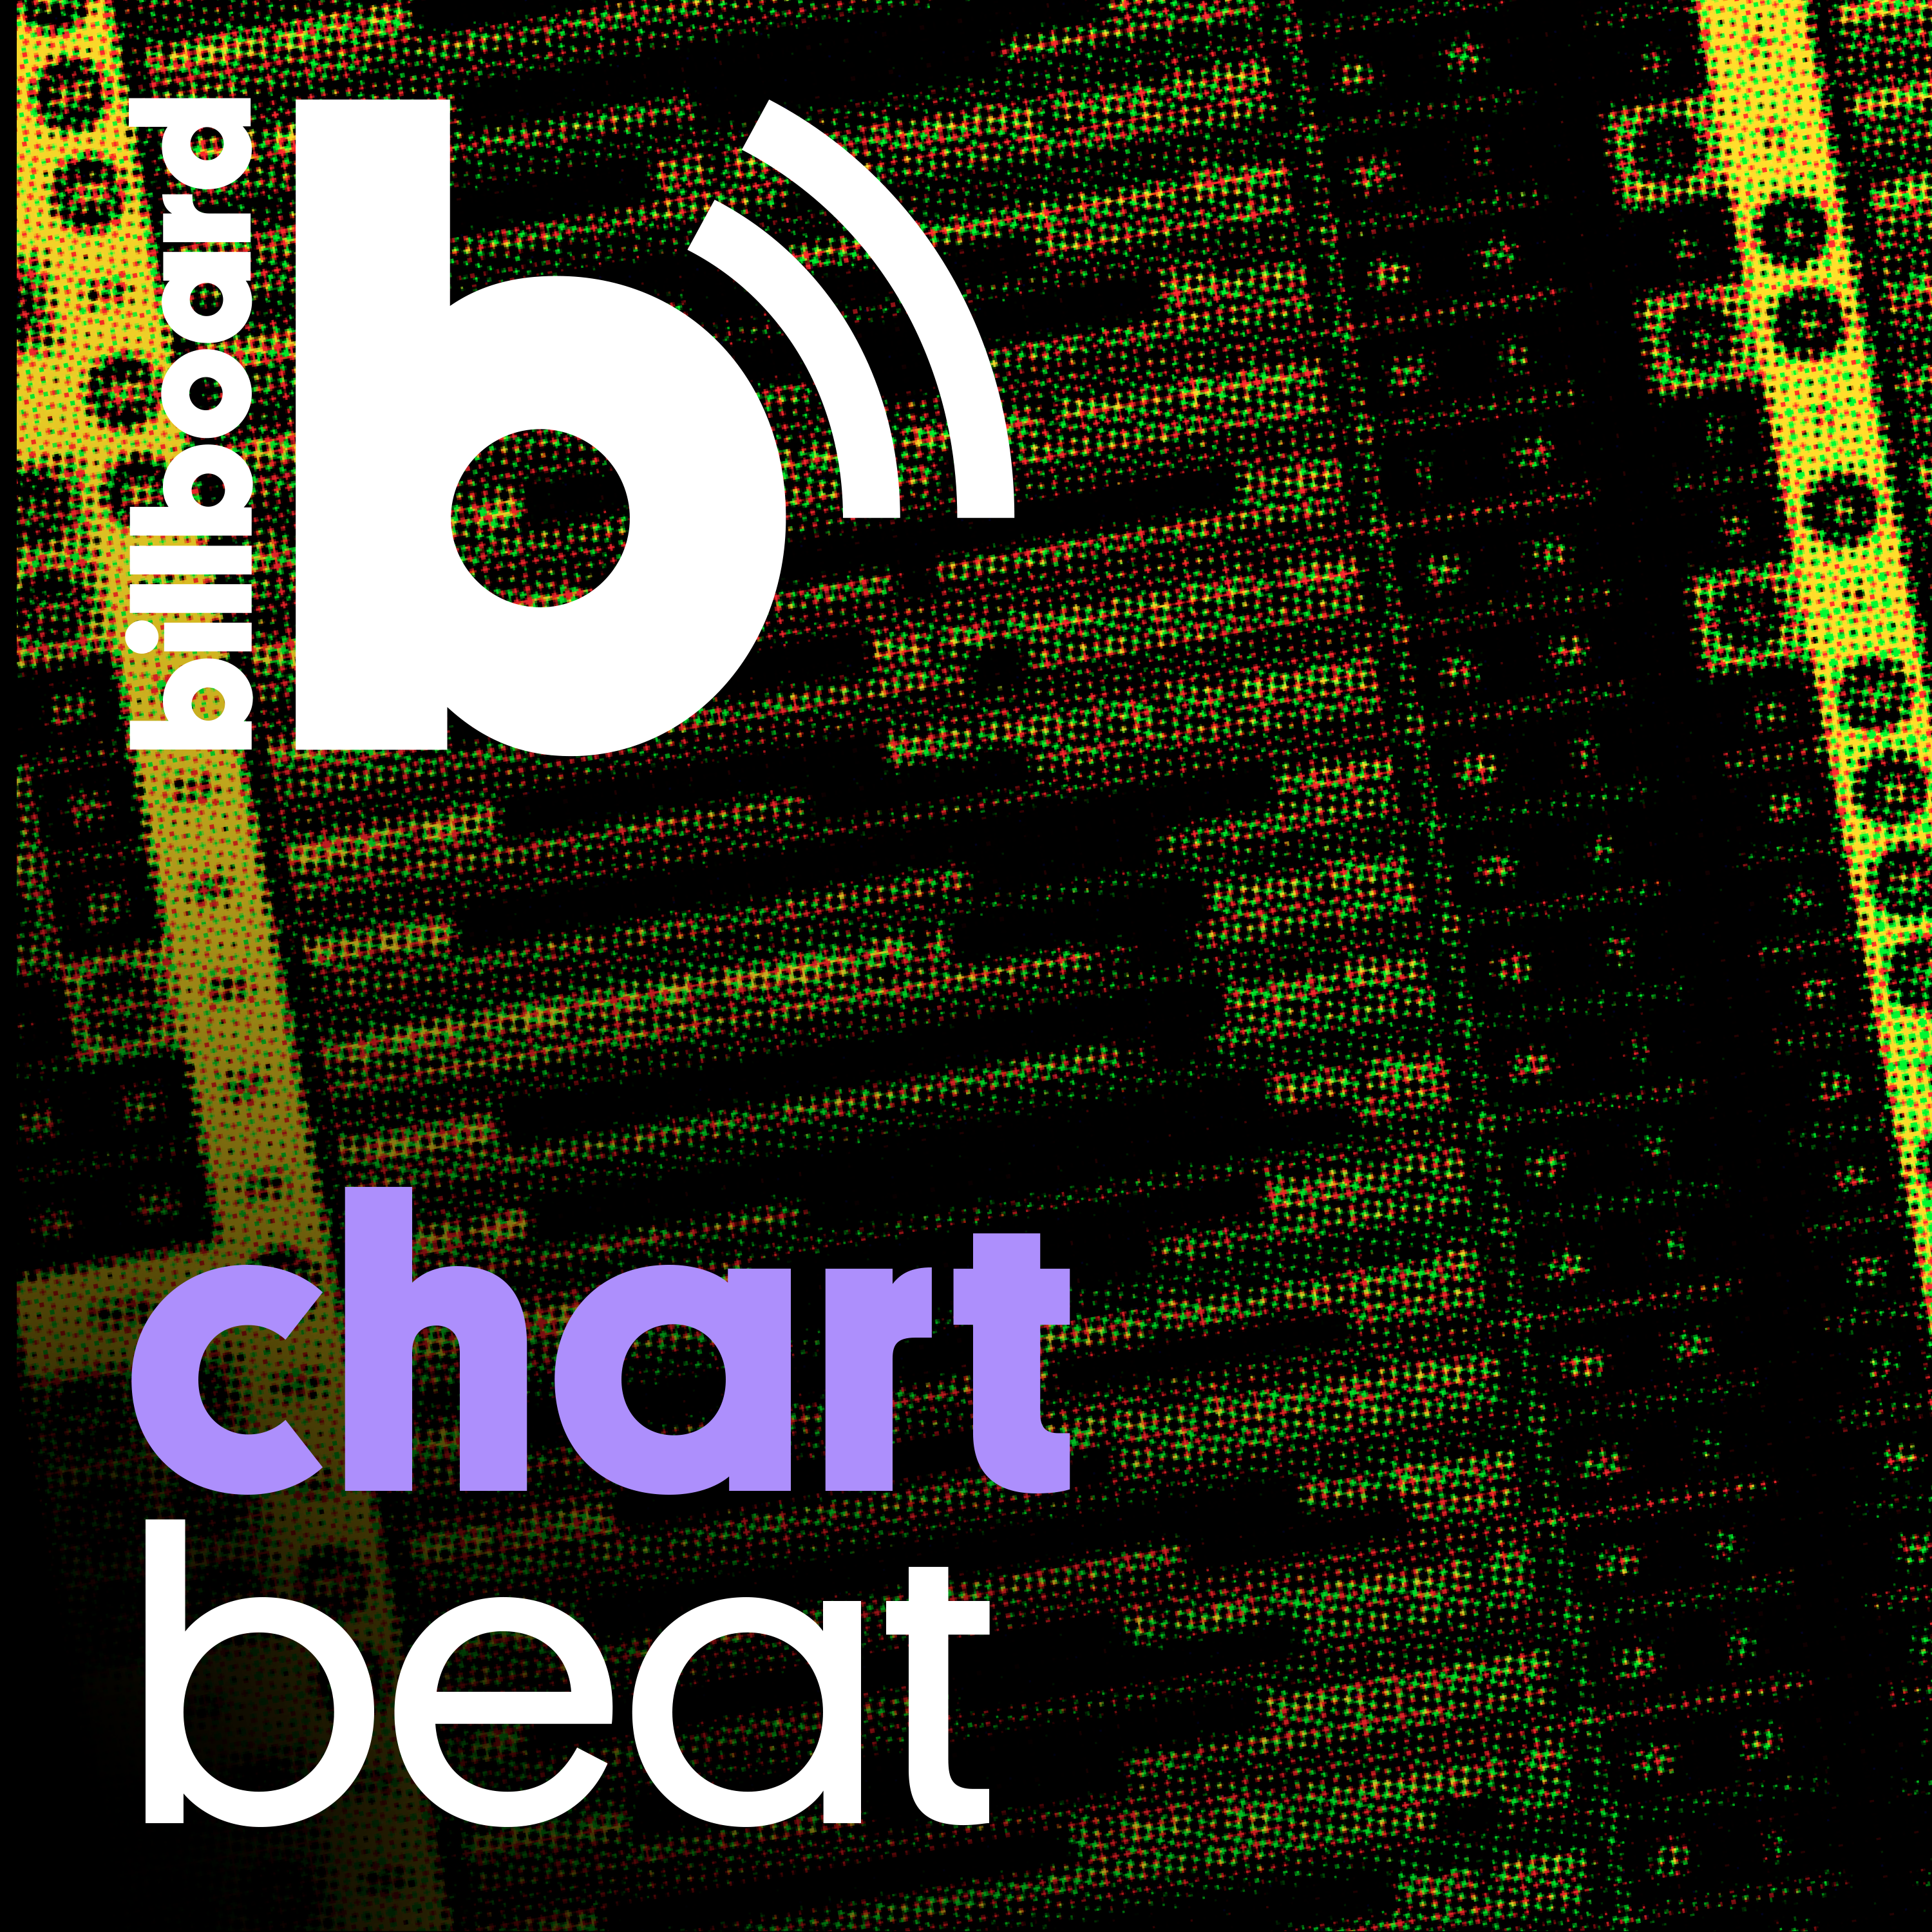 Chart Beat Podcast